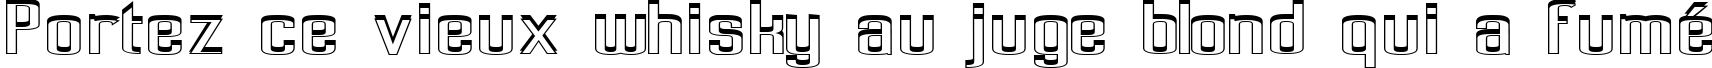 Пример написания шрифтом Pecot Couteir текста на французском